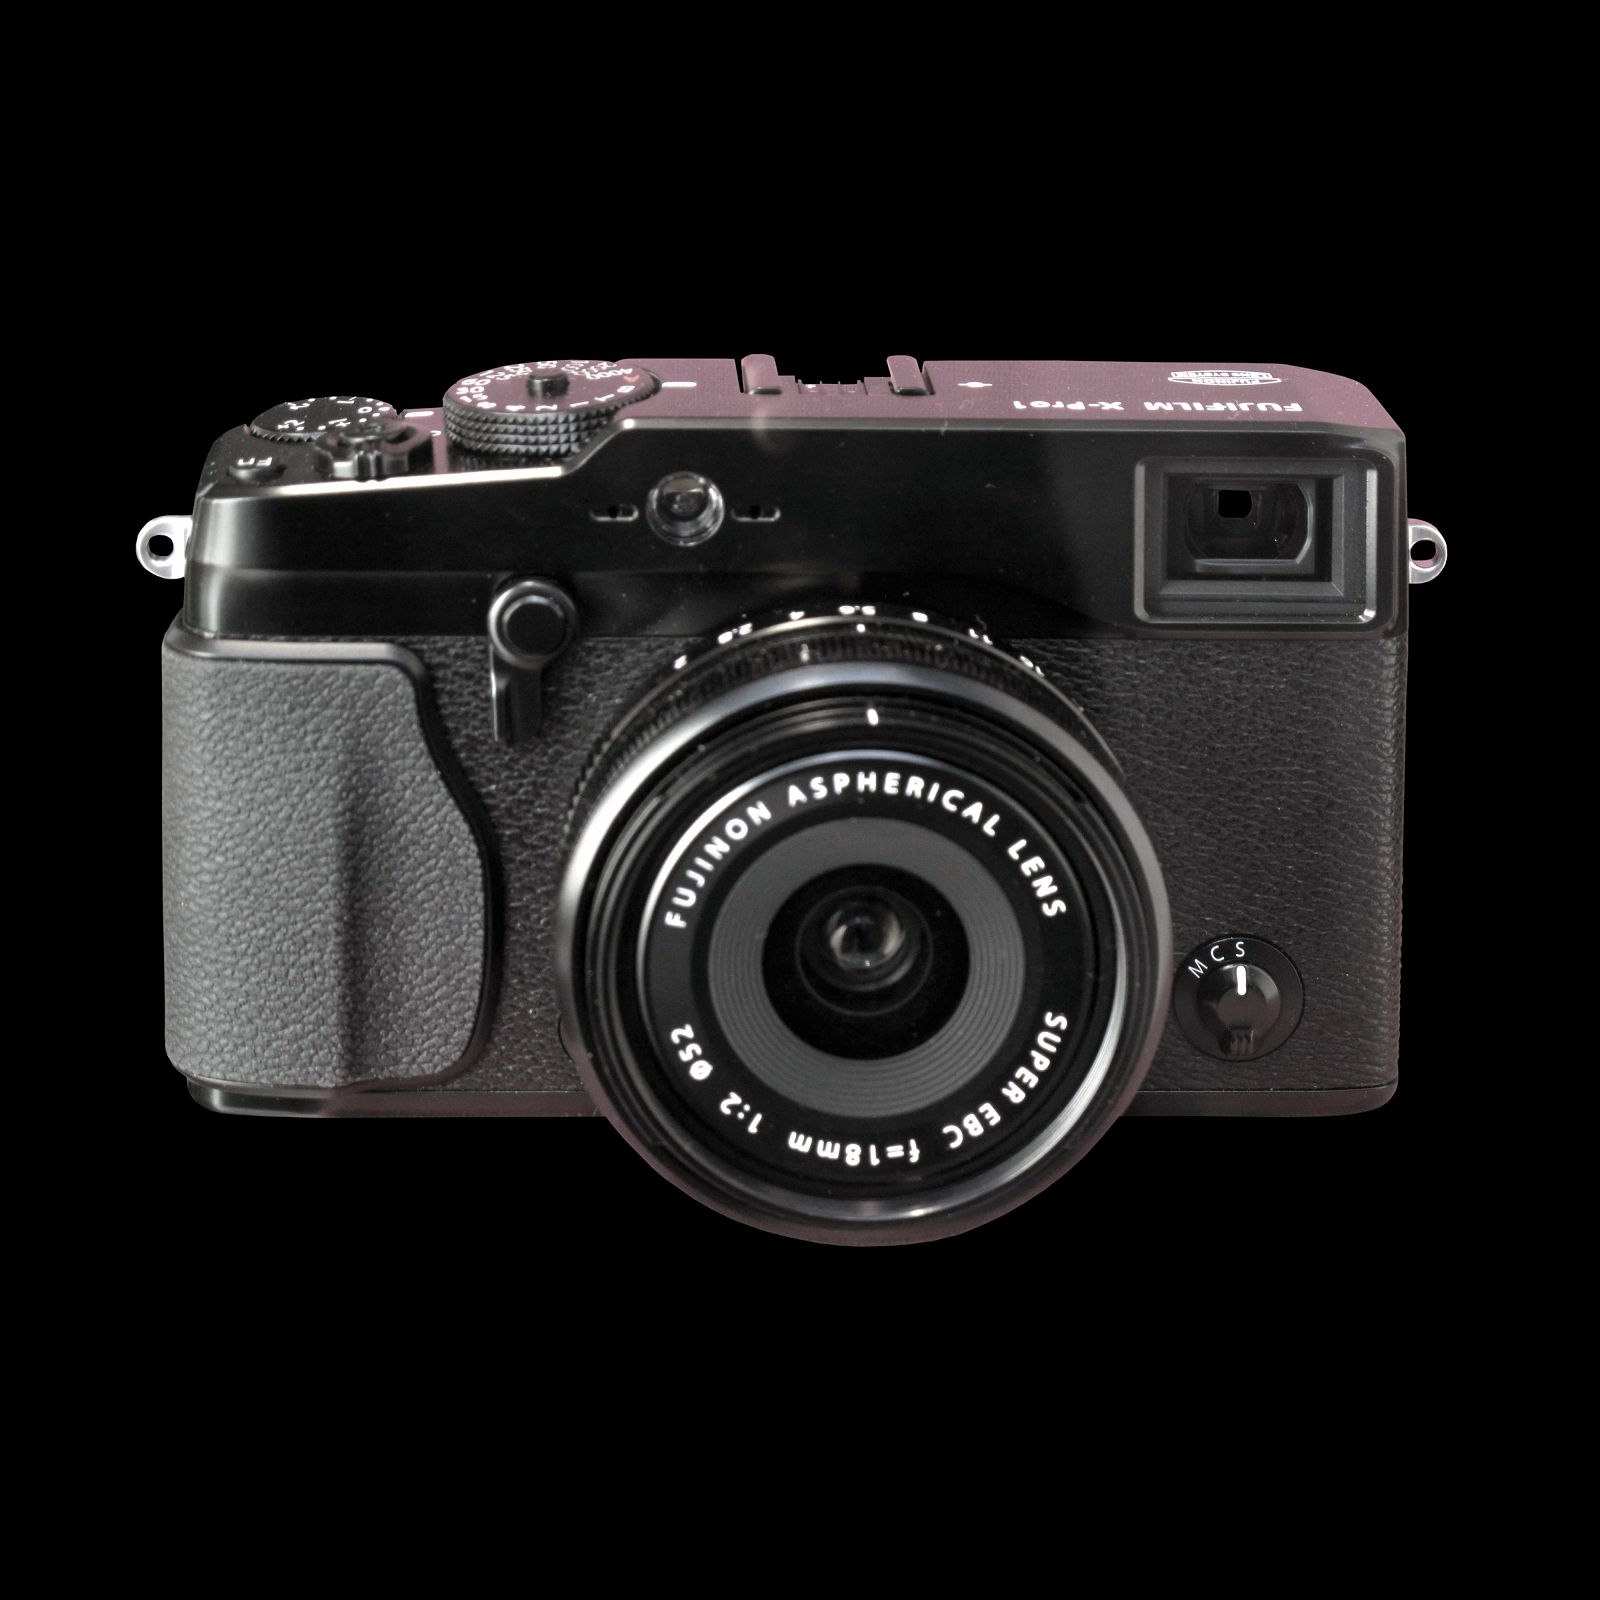 Fujifilm X-PRO 1 + 18mm F2 R KIT Digitalni fotoaparat Mirrorless camera Fuji Finepix s širokokutnim objektivom fiksne žarišne duljine XF 18 2.0 fixed prime lens